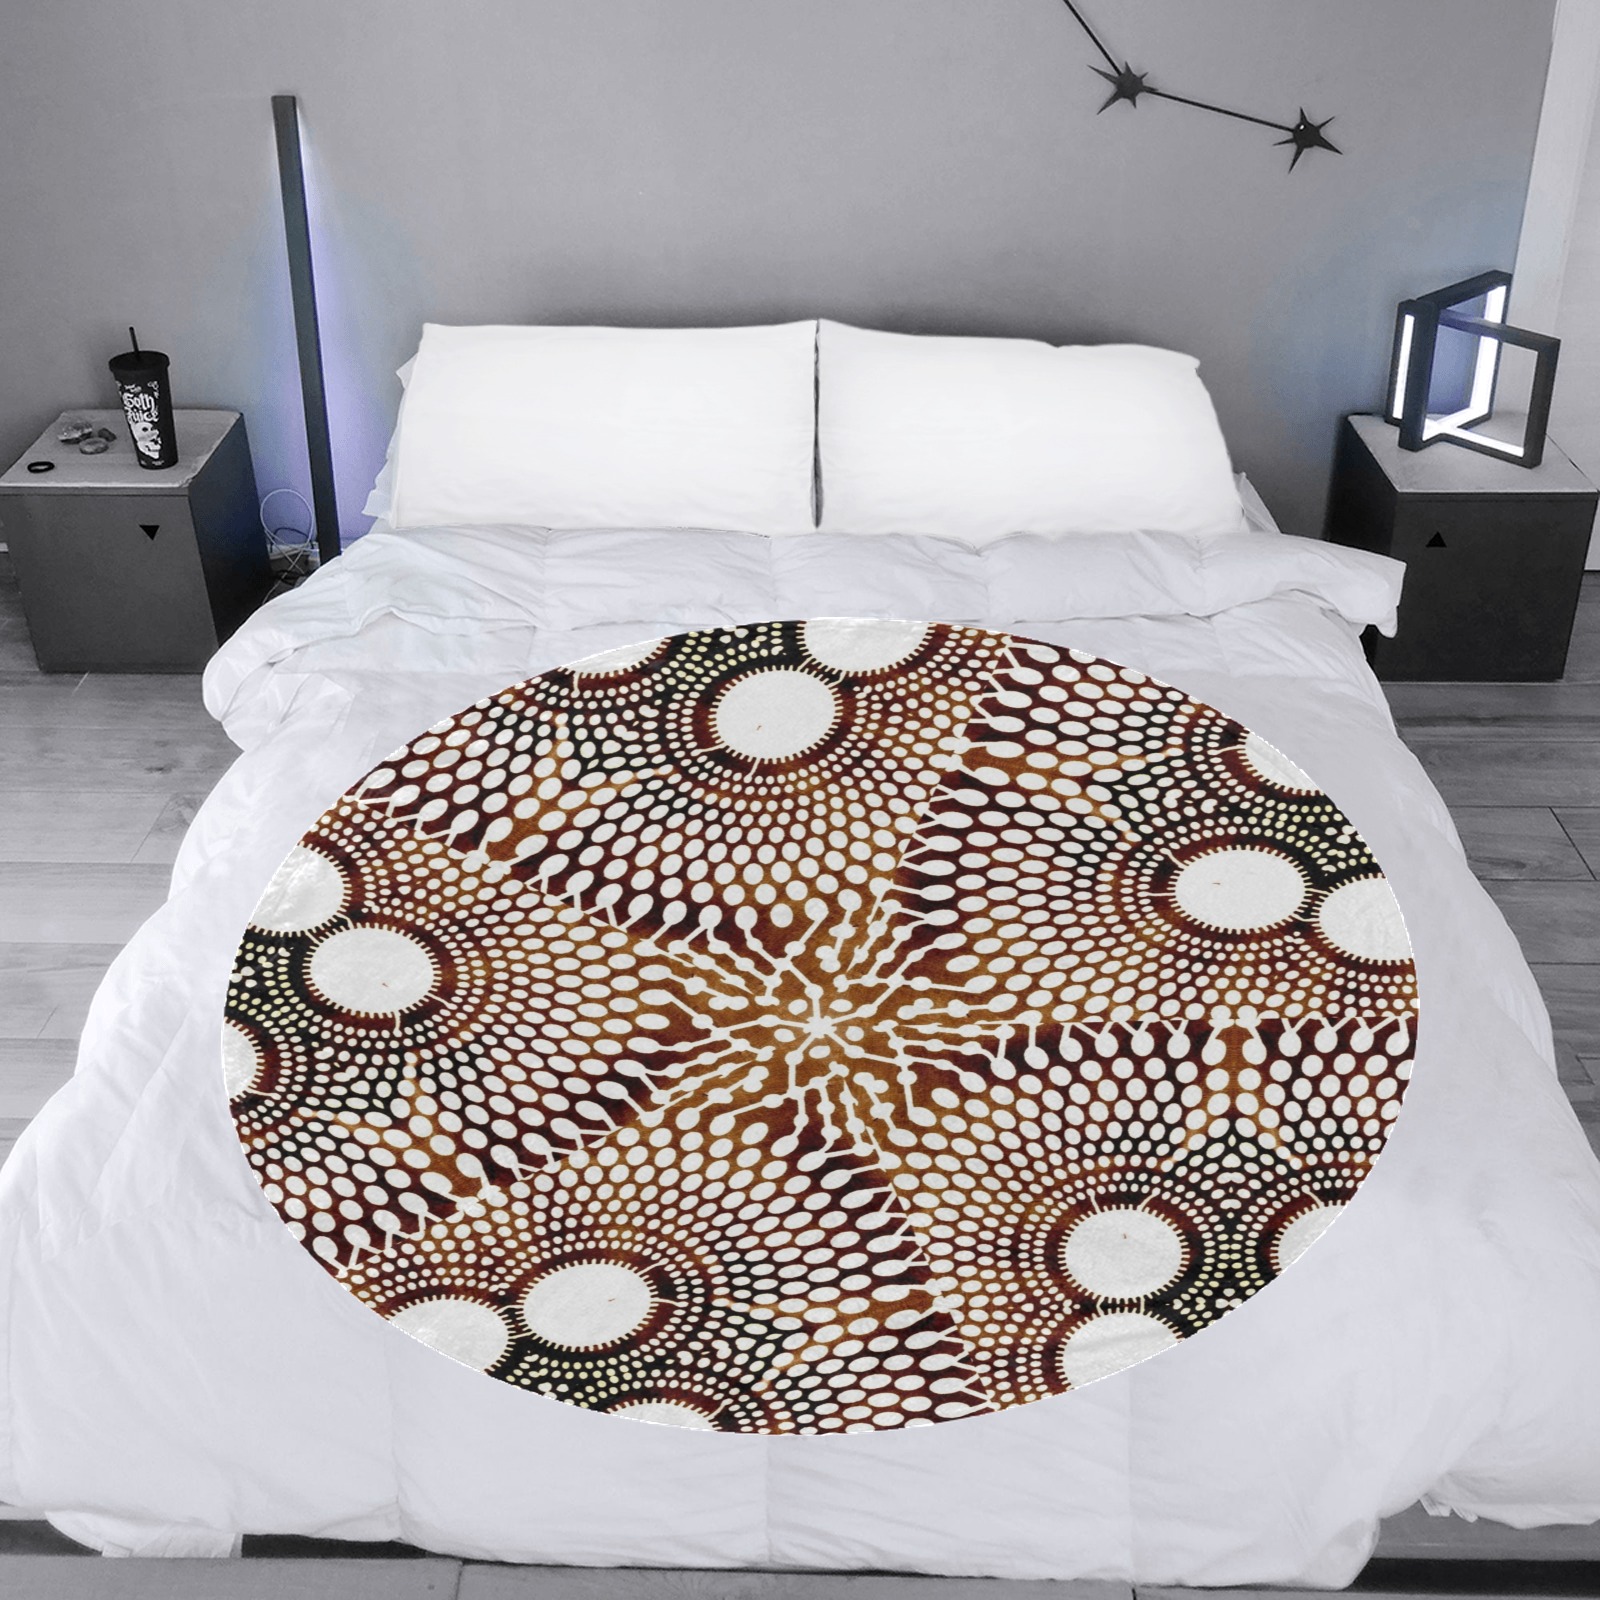 AFRICAN PRINT PATTERN 4 Circular Ultra-Soft Micro Fleece Blanket 47"